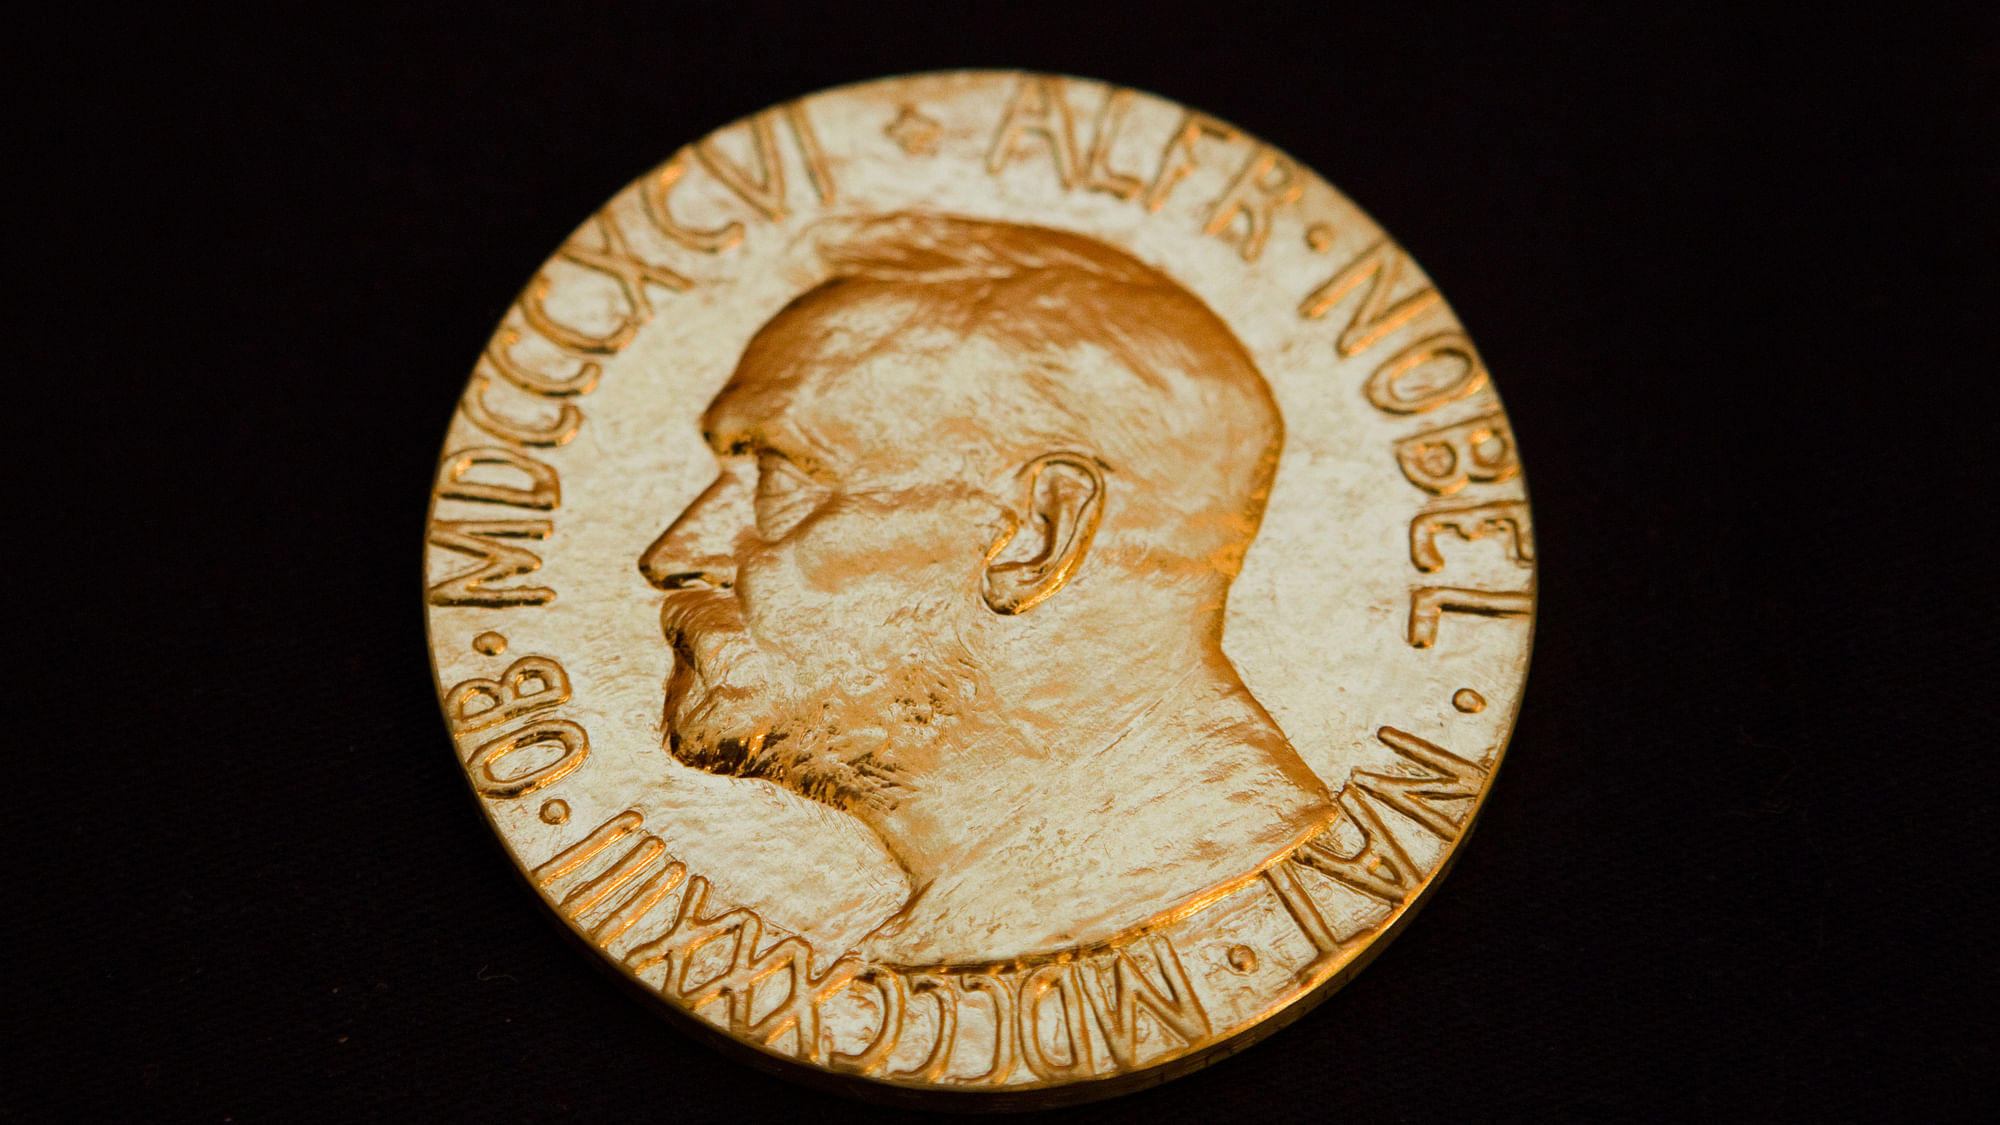 The 18-carat gold Nobel Peace Prize medal. (Photo: Reuters)